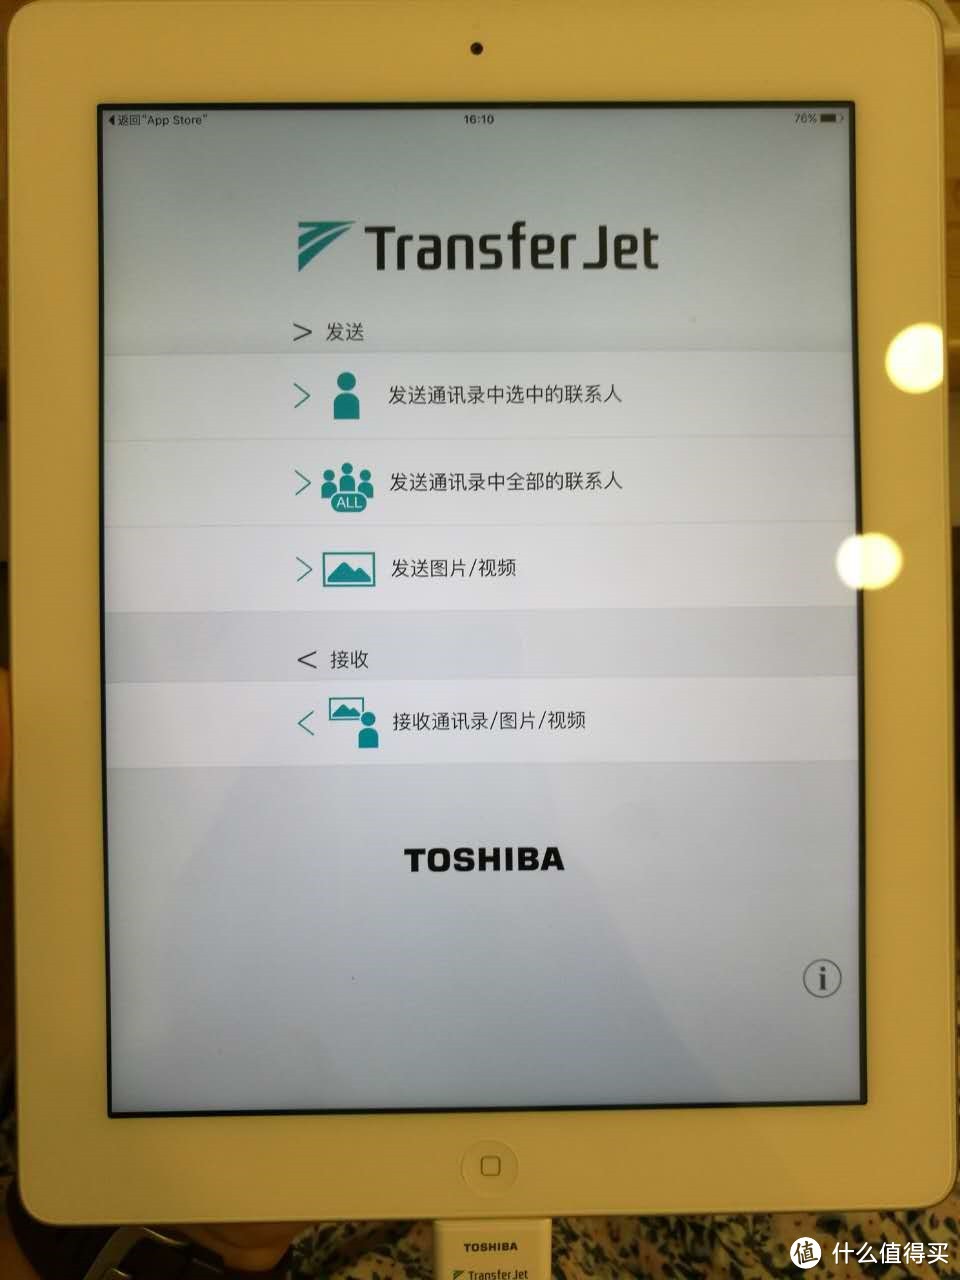 TOSHIBA 东芝 TransferJet 适配器 用后分享